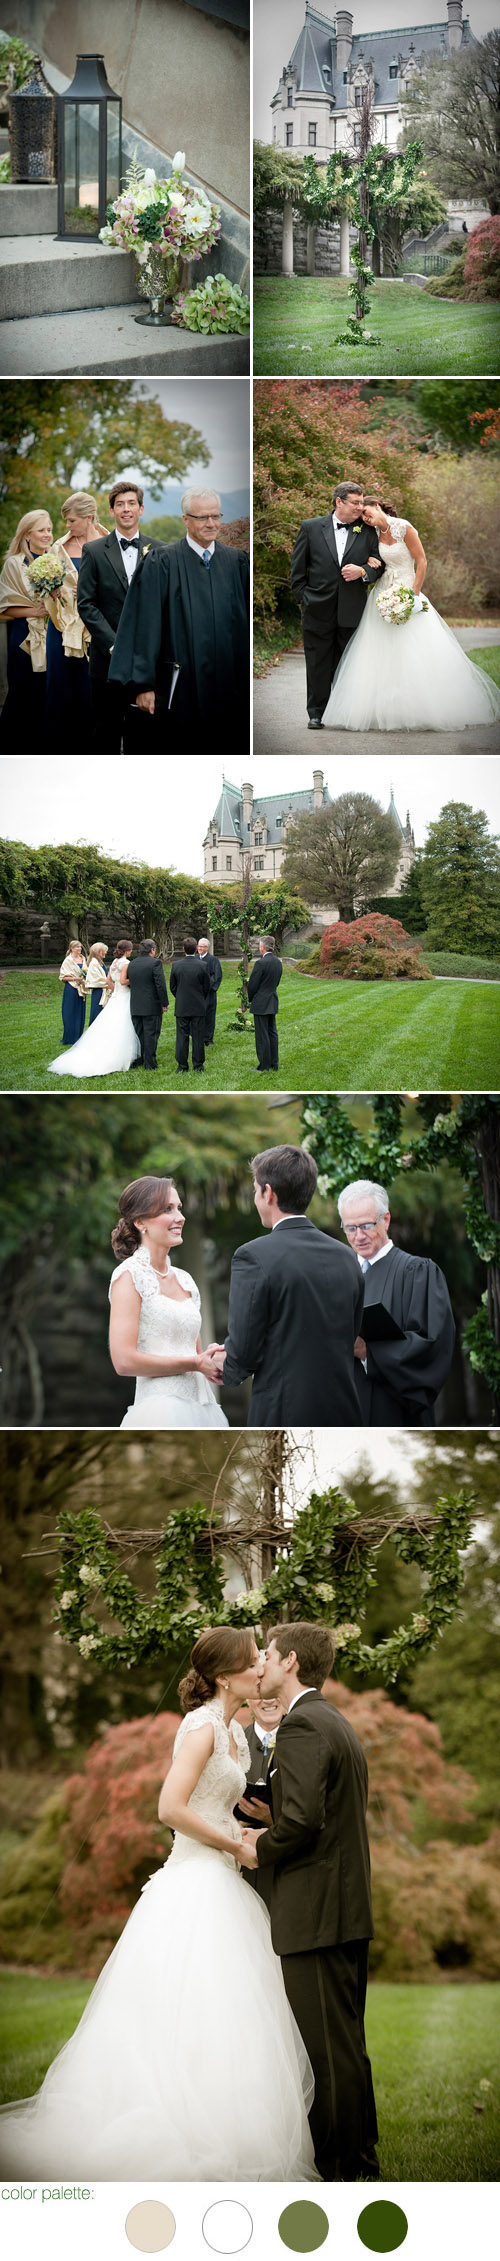 Biltmore Estate, Asheville, North Carolina real wedding, ceremony images by Woodward + Rick